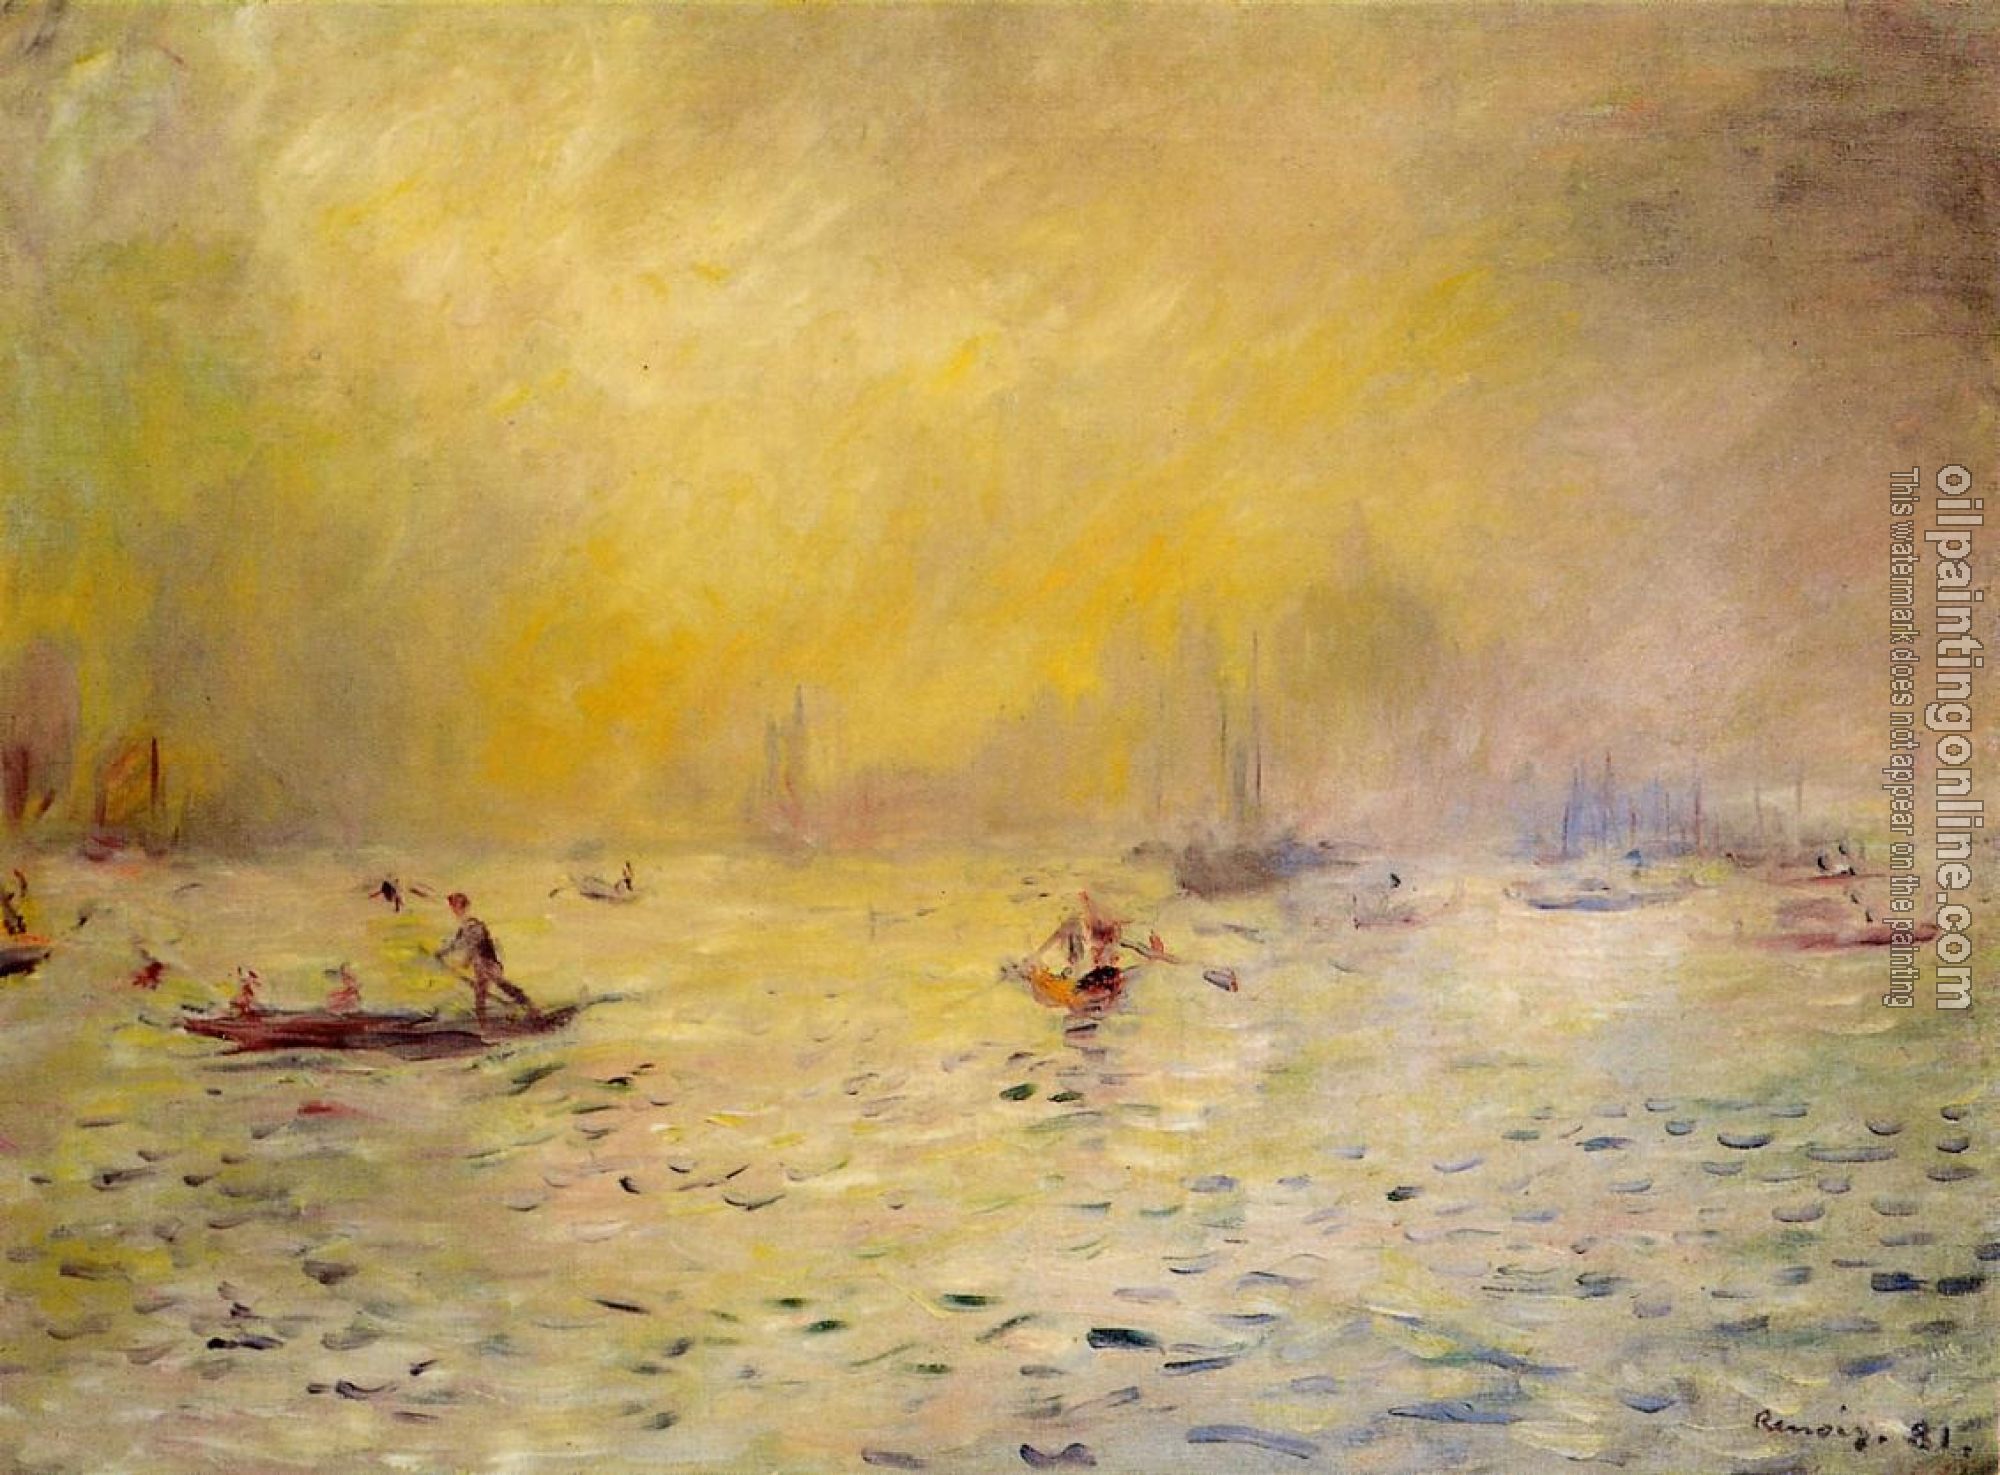 Renoir, Pierre Auguste - View of Venice, Fog